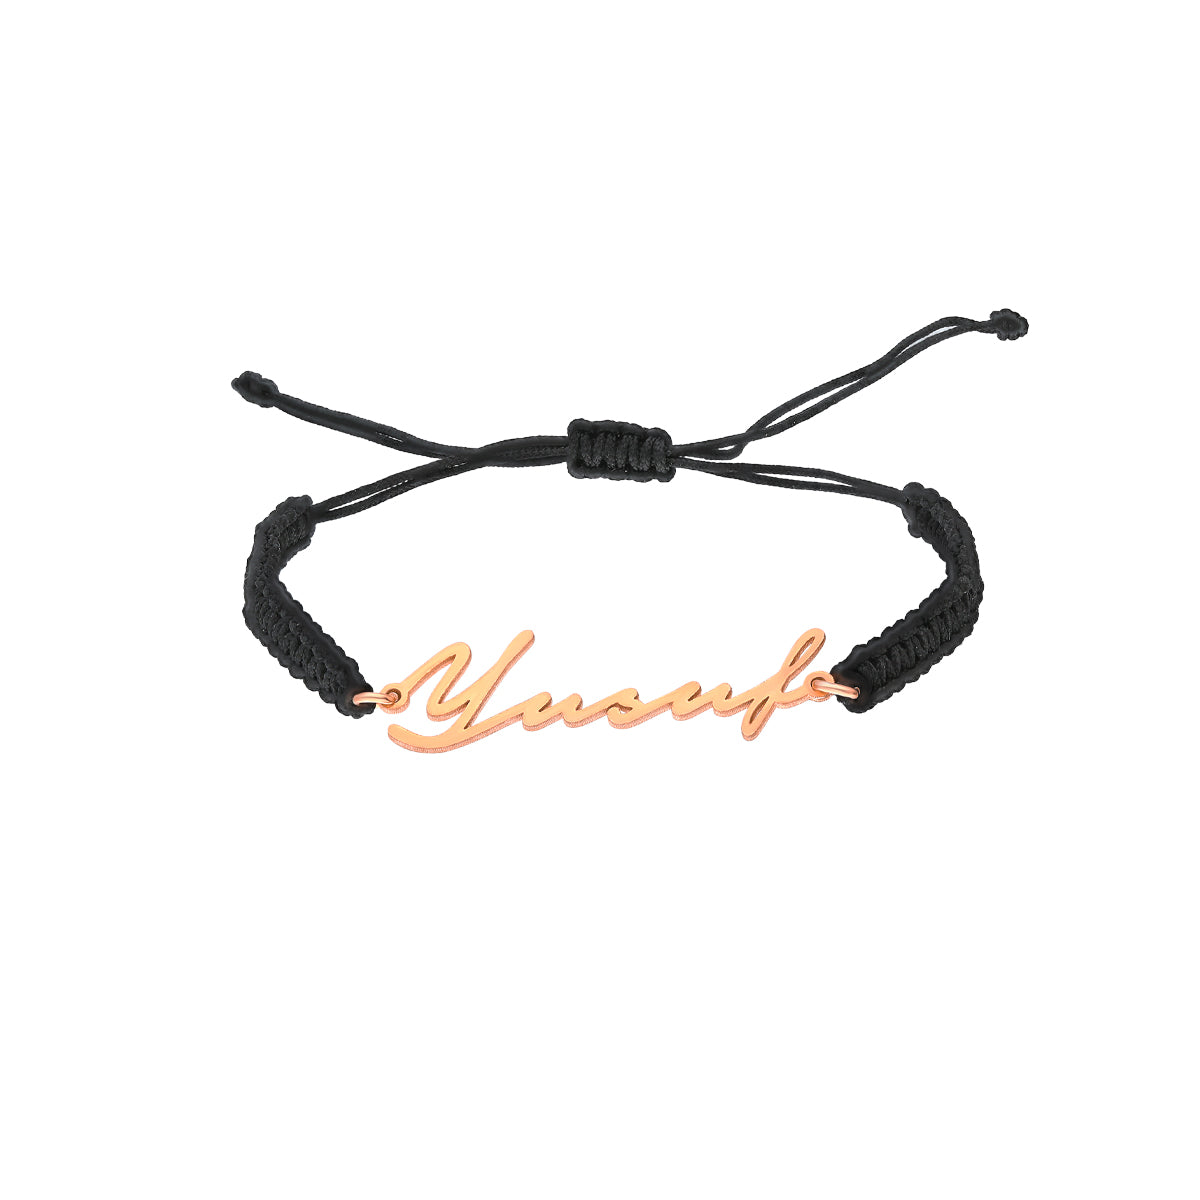 Signatur Armband mit schwarzes Seil (7067686567981)